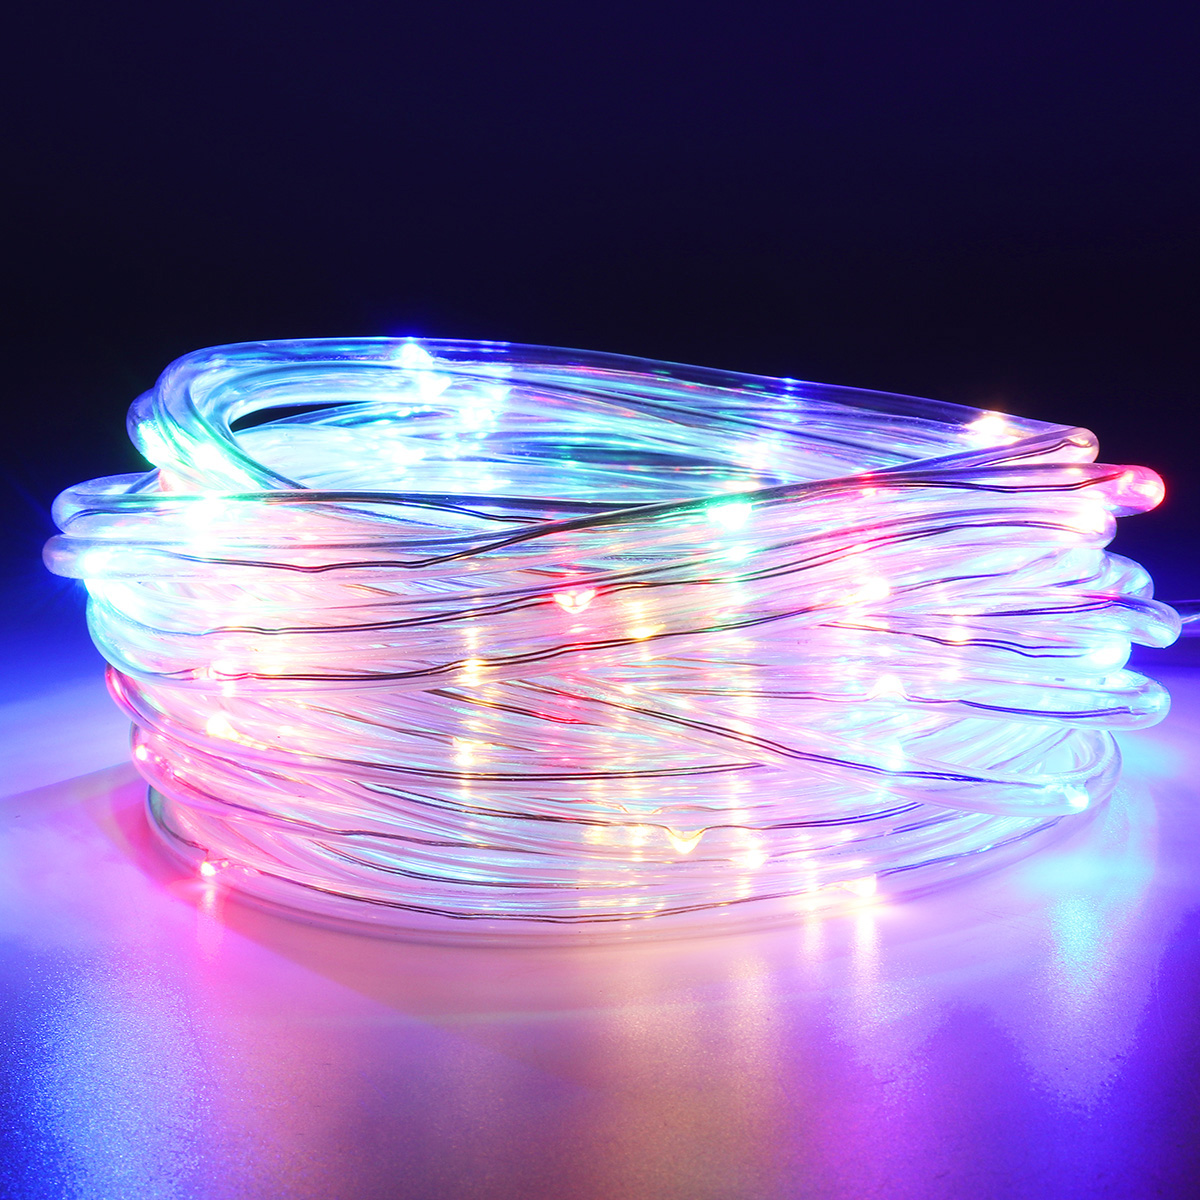 10M-100LED-Outdoor-Tube-Rope-Strip-String-Light-RGB-Lamp-Xmas-Home-Decor-Lights-with-US-Plug-1795568-3